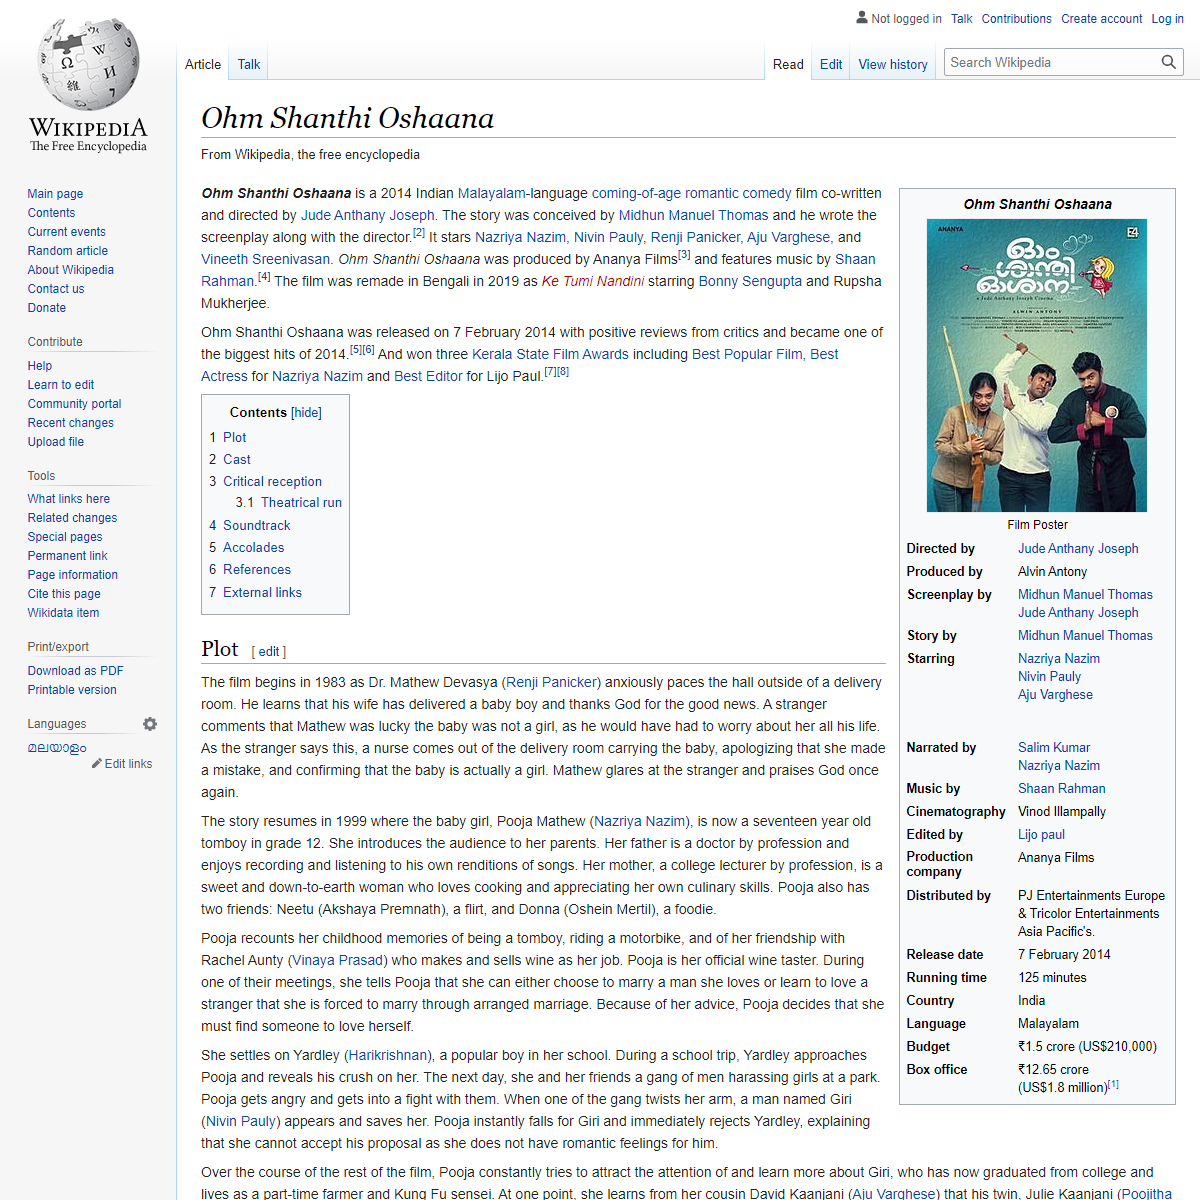 A complete backup of https://en.wikipedia.org/wiki/Ohm_Shanthi_Oshaana